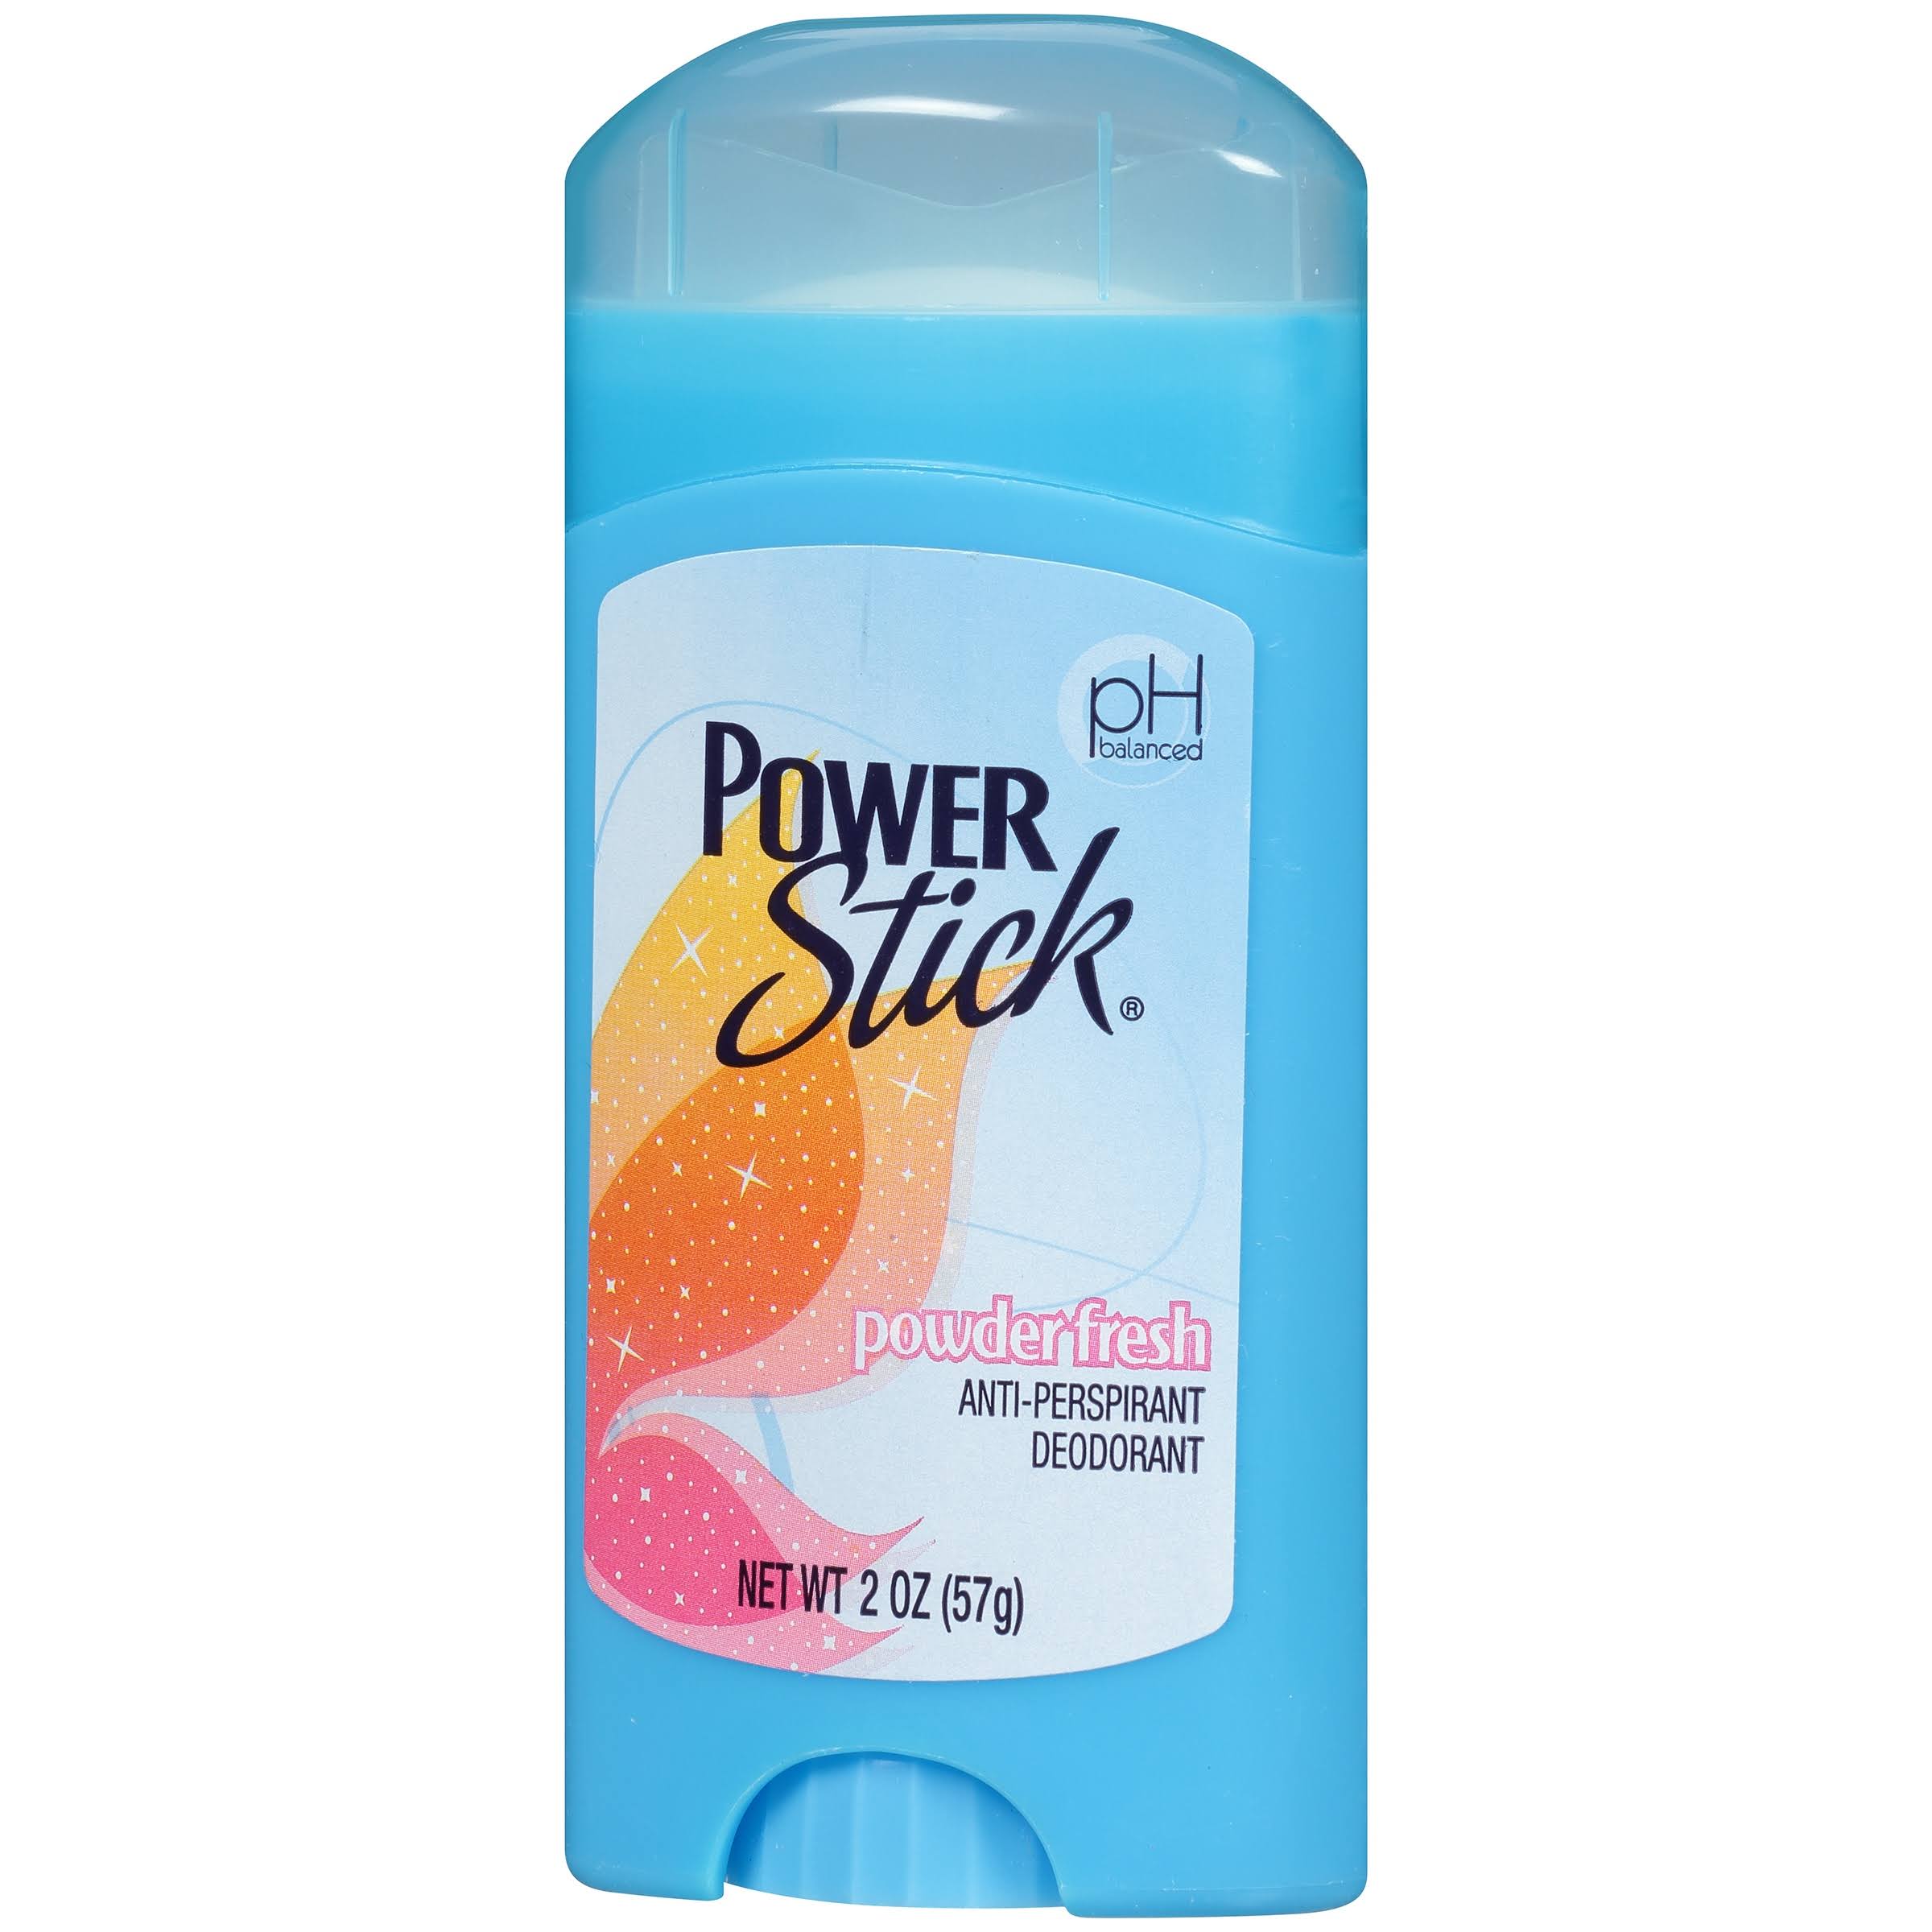 Lady Power Stick Anti-Perspirant Deodorant - Power Fresh Scent, 2oz